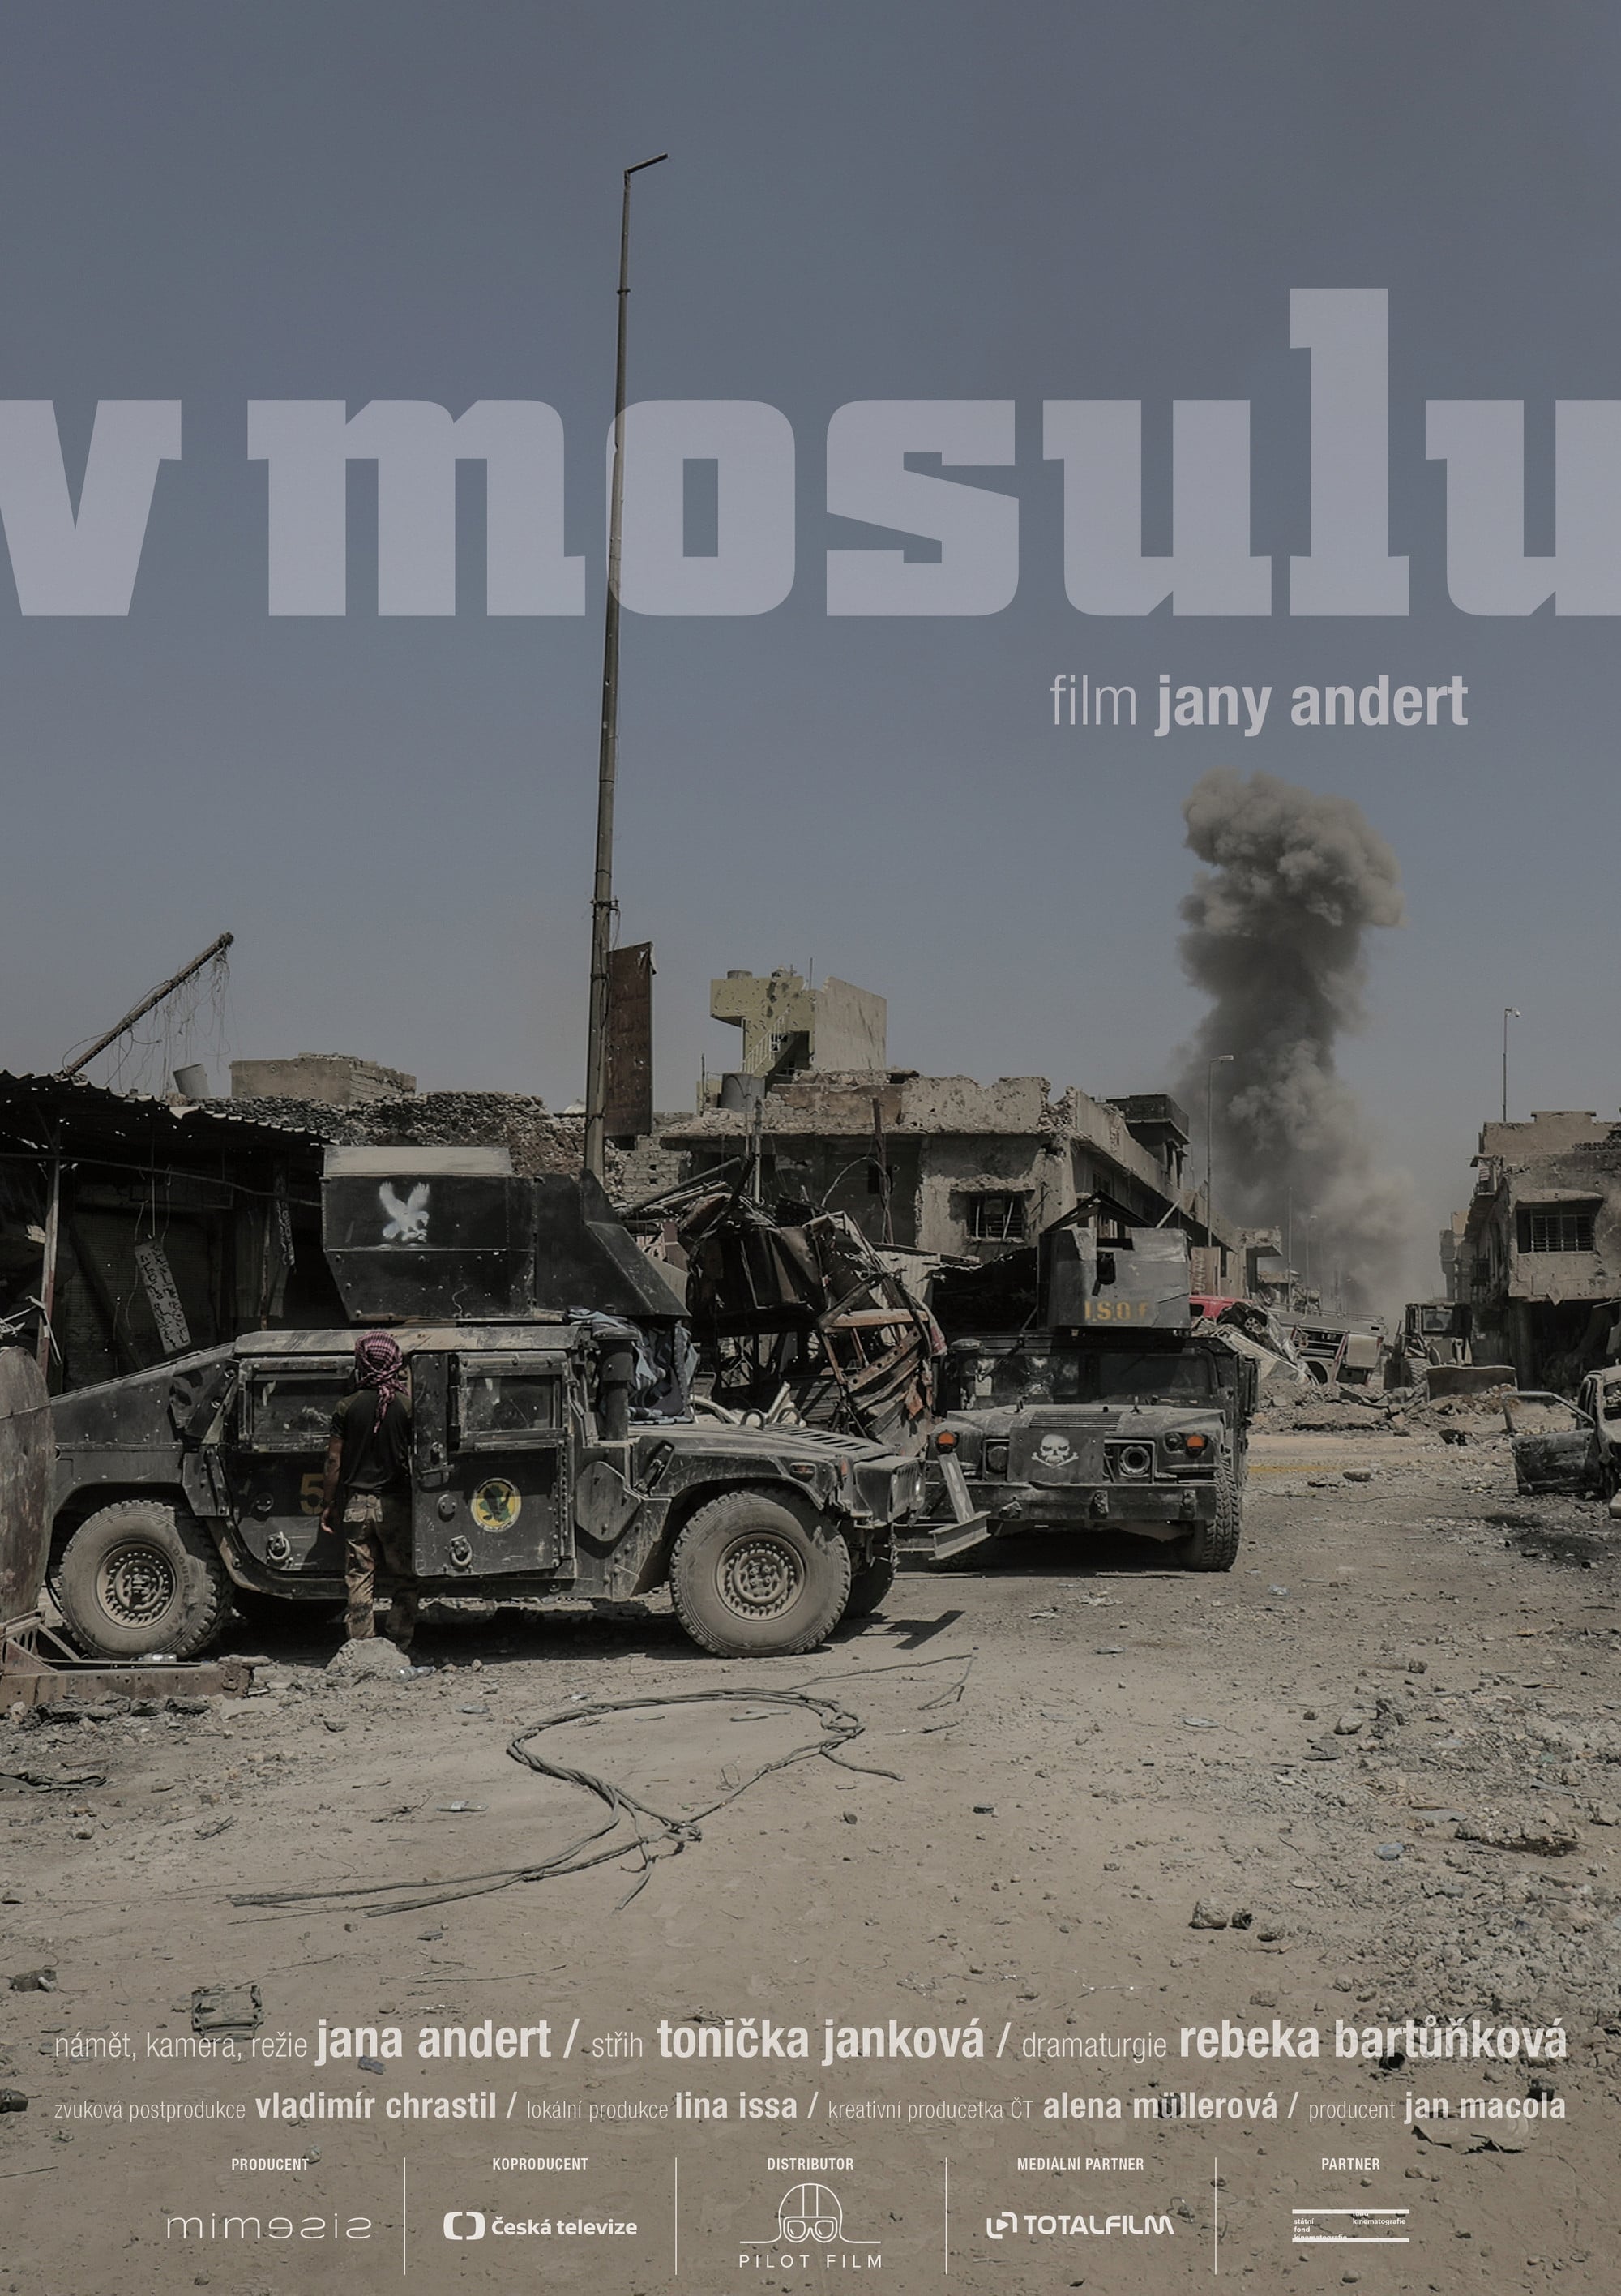 Inside Mosul